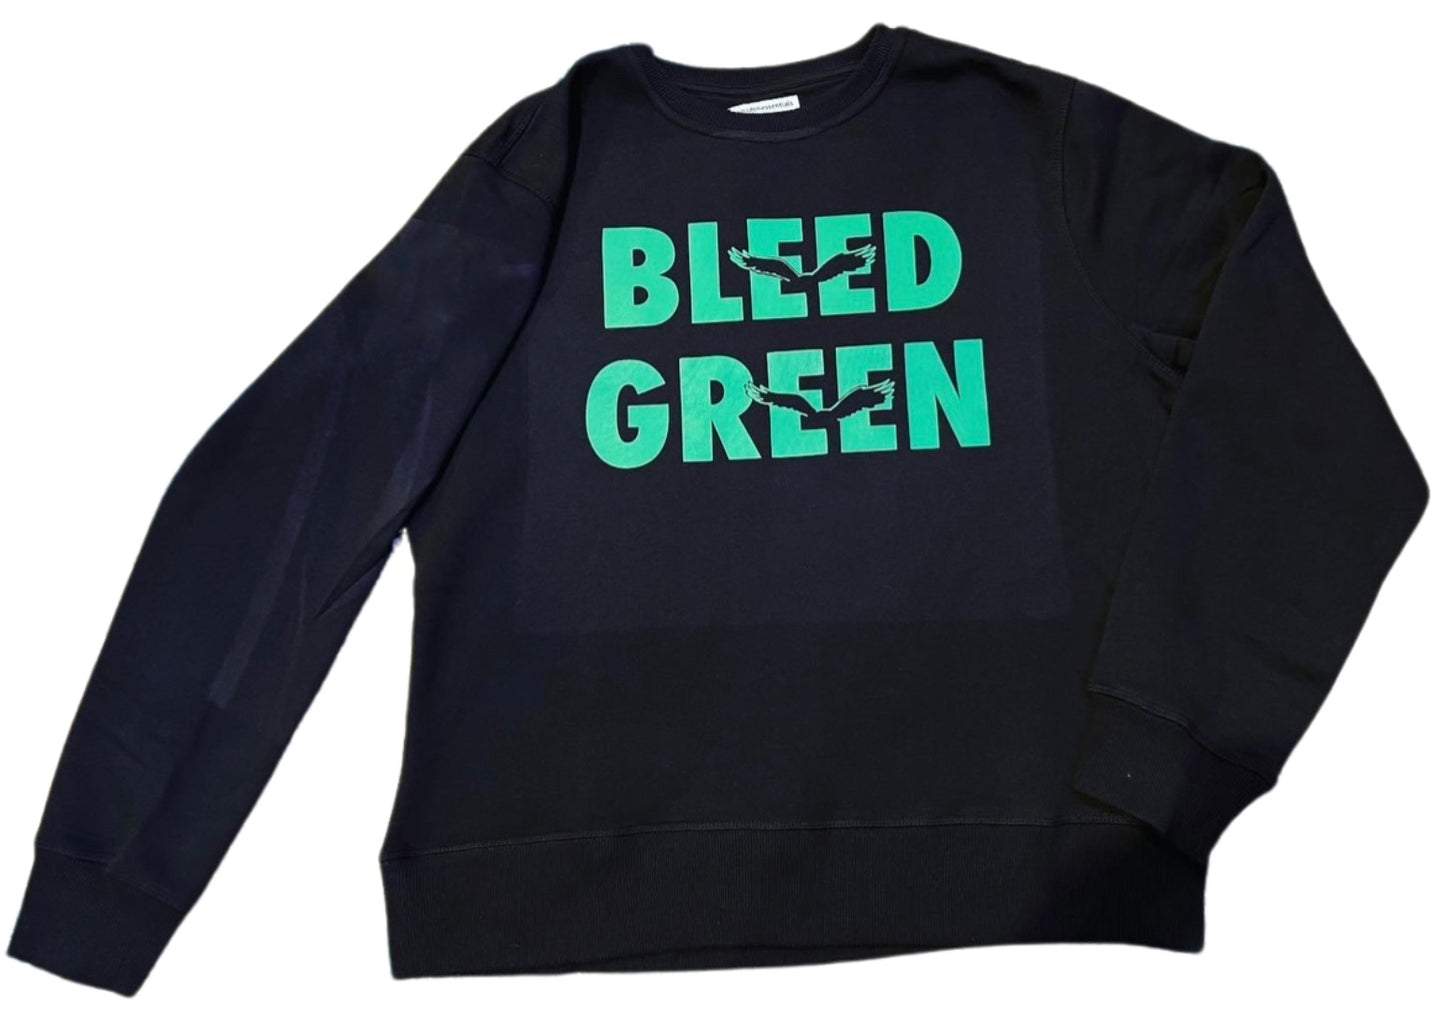 Bleed green crewneck